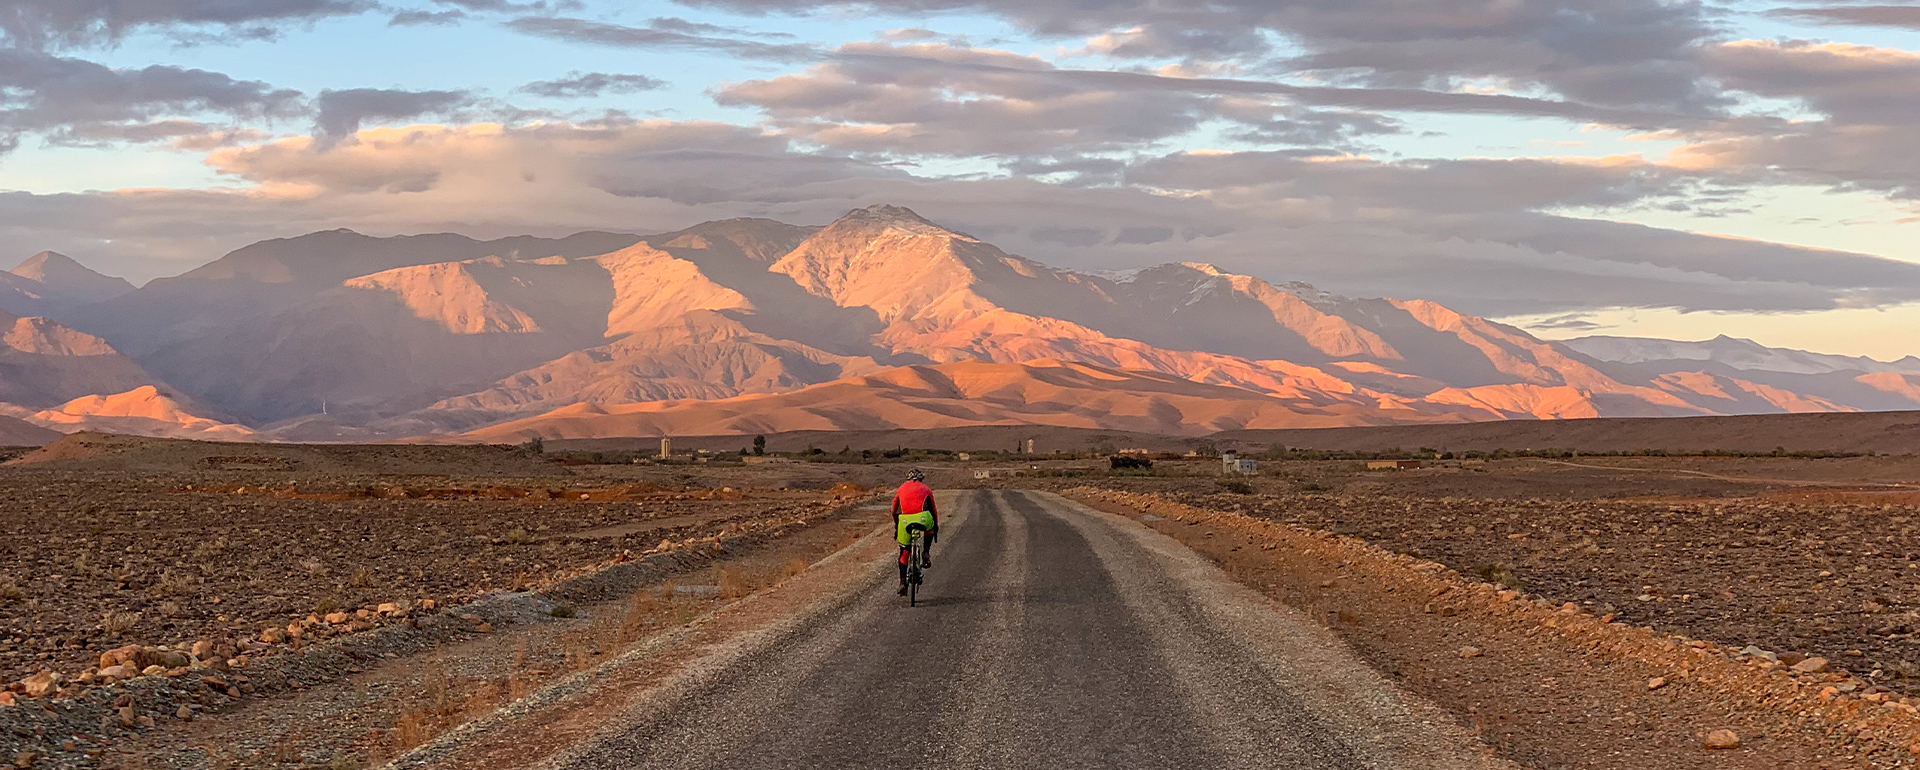 Gravel-Bike-Reise in Marokko